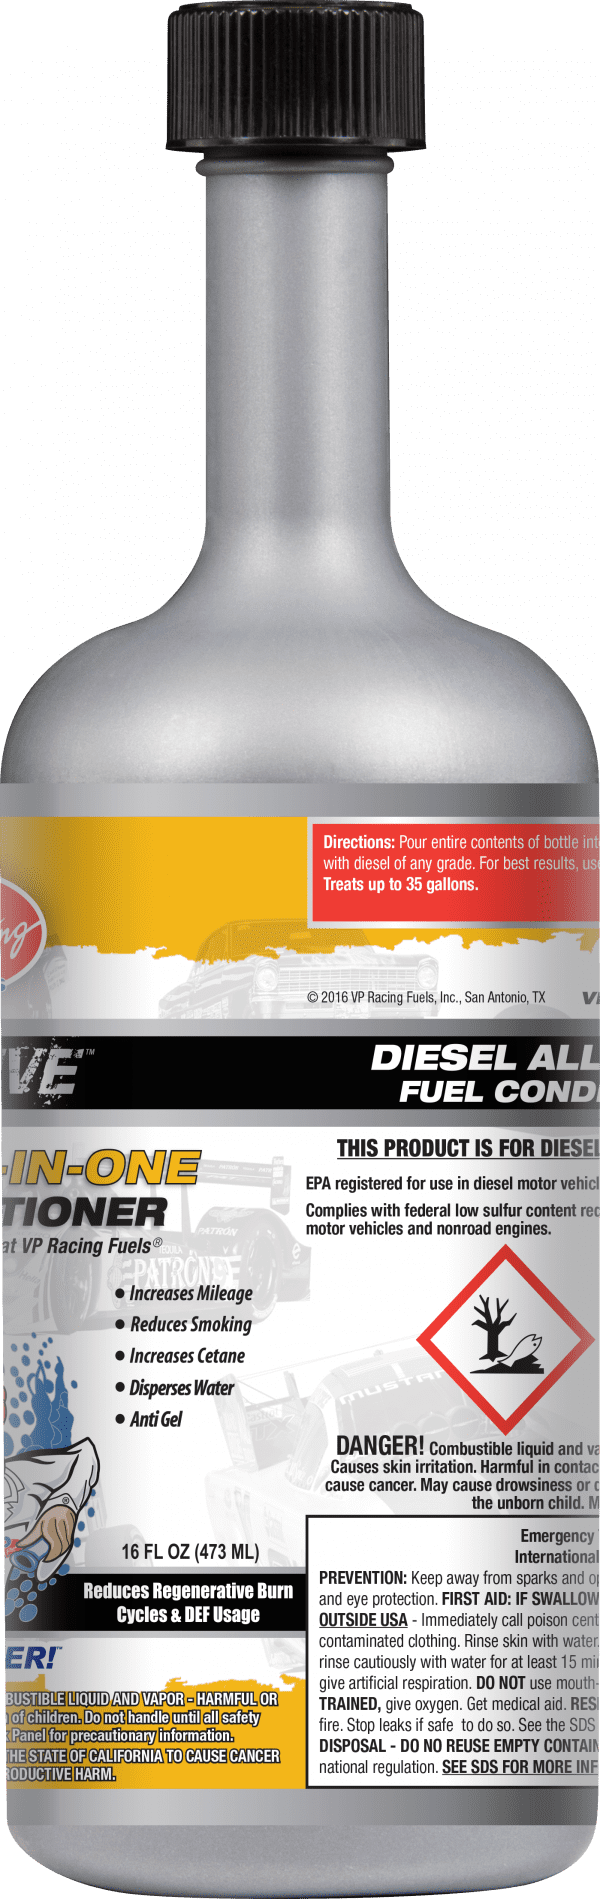 VP Diesel All-In-One diesel fuel additive - side label